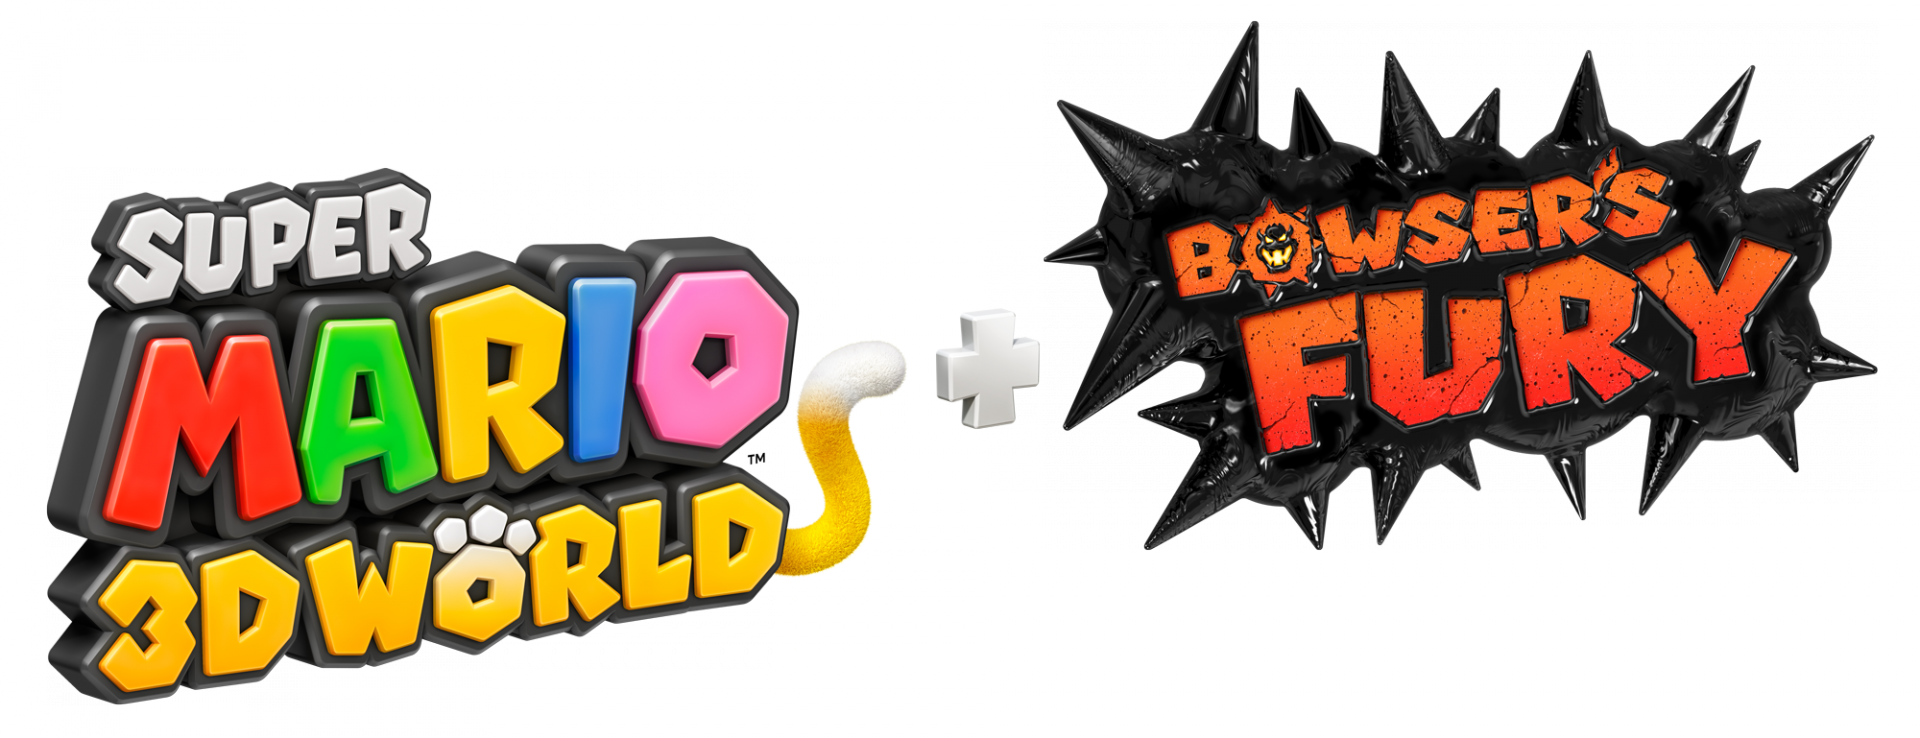 Super Mario 3d World + Bowser's Fury. Марио Bowser Fury. Игра super Mario 3d World Bowser's Fury Switch. Super Mario 3d World Bowser's Fury картридж. Super mario bowser fury